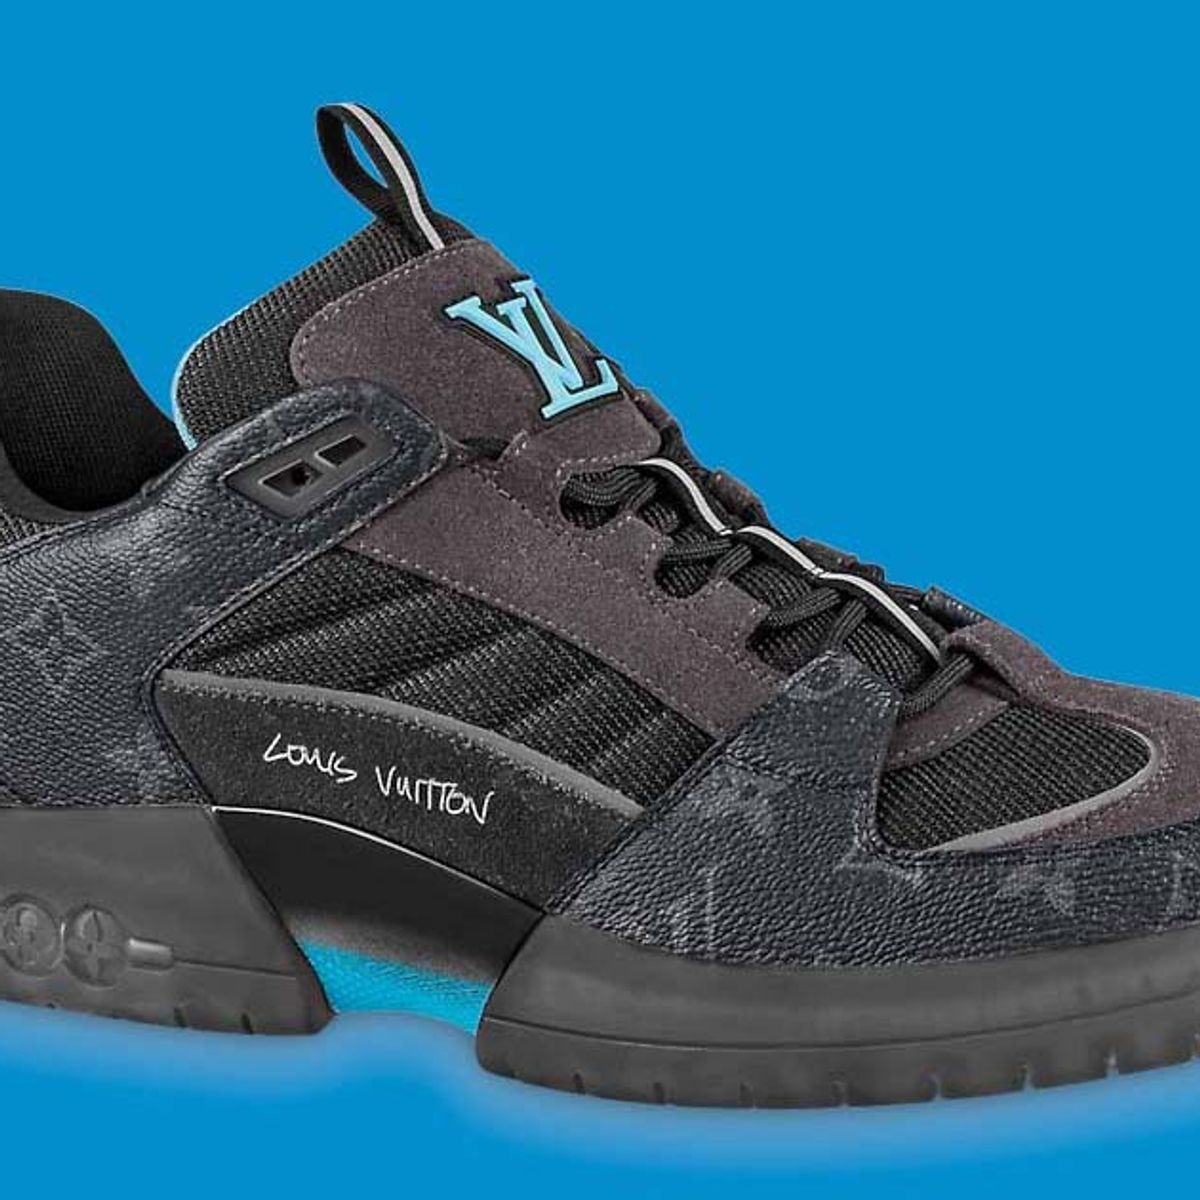 An Official Look at Lucien Clarke's Louis Vuitton Skate Shoe